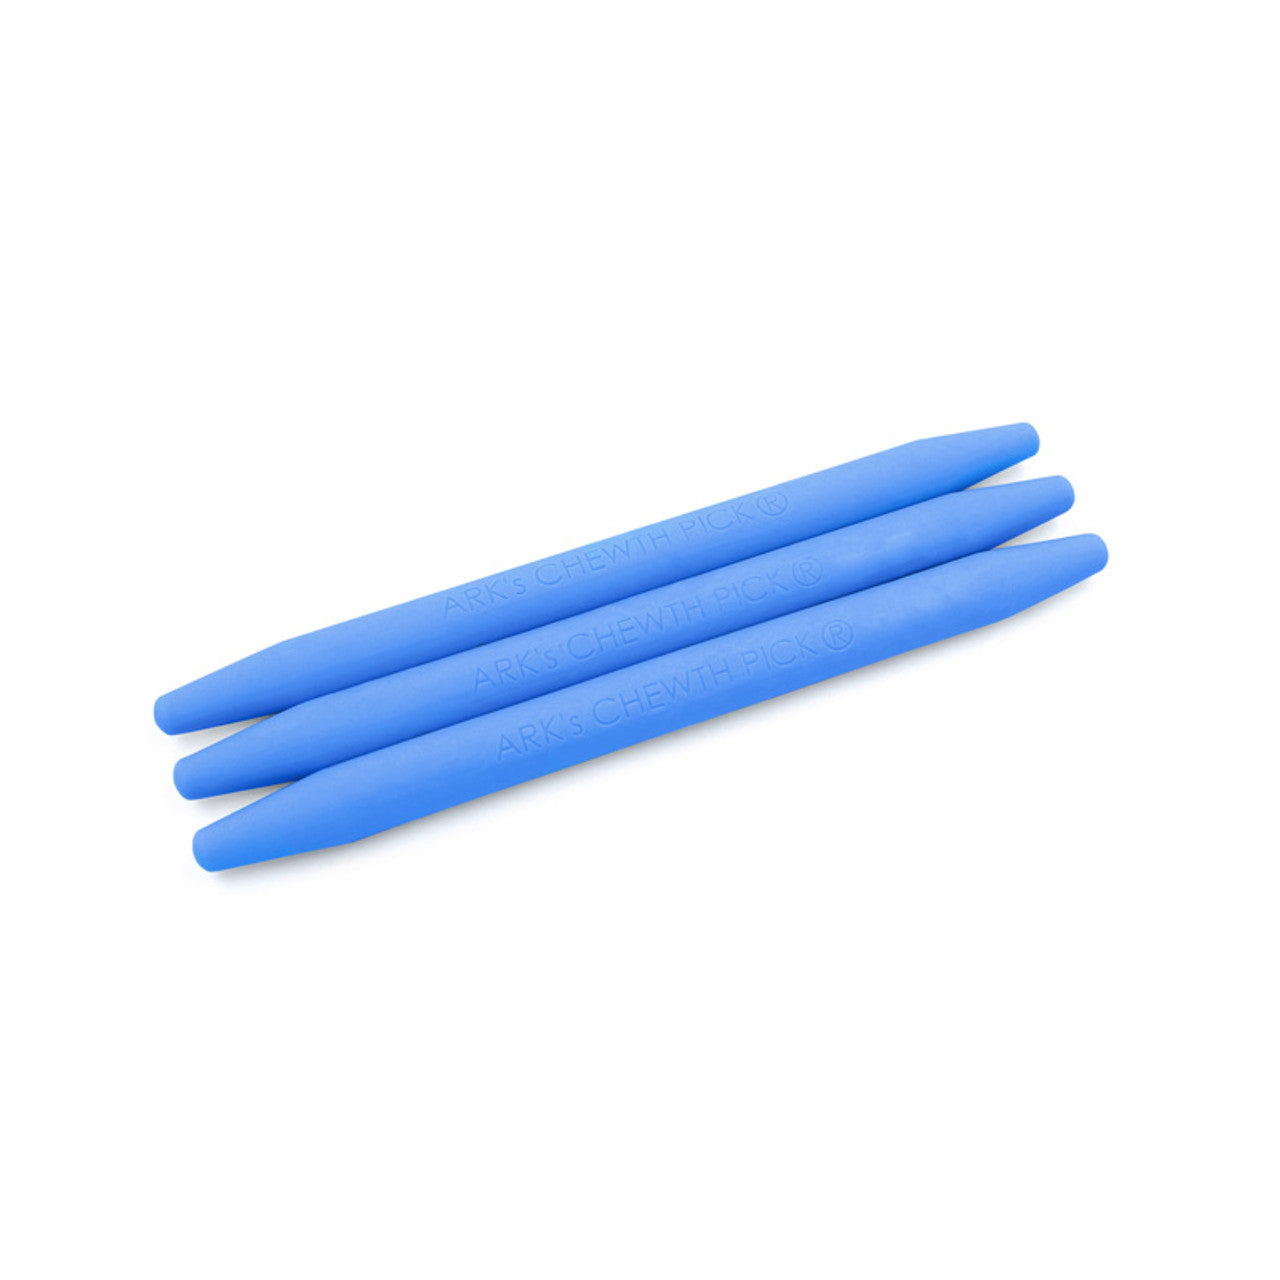 Ark’s Chewth Pick® Chewable “Toothpicks”